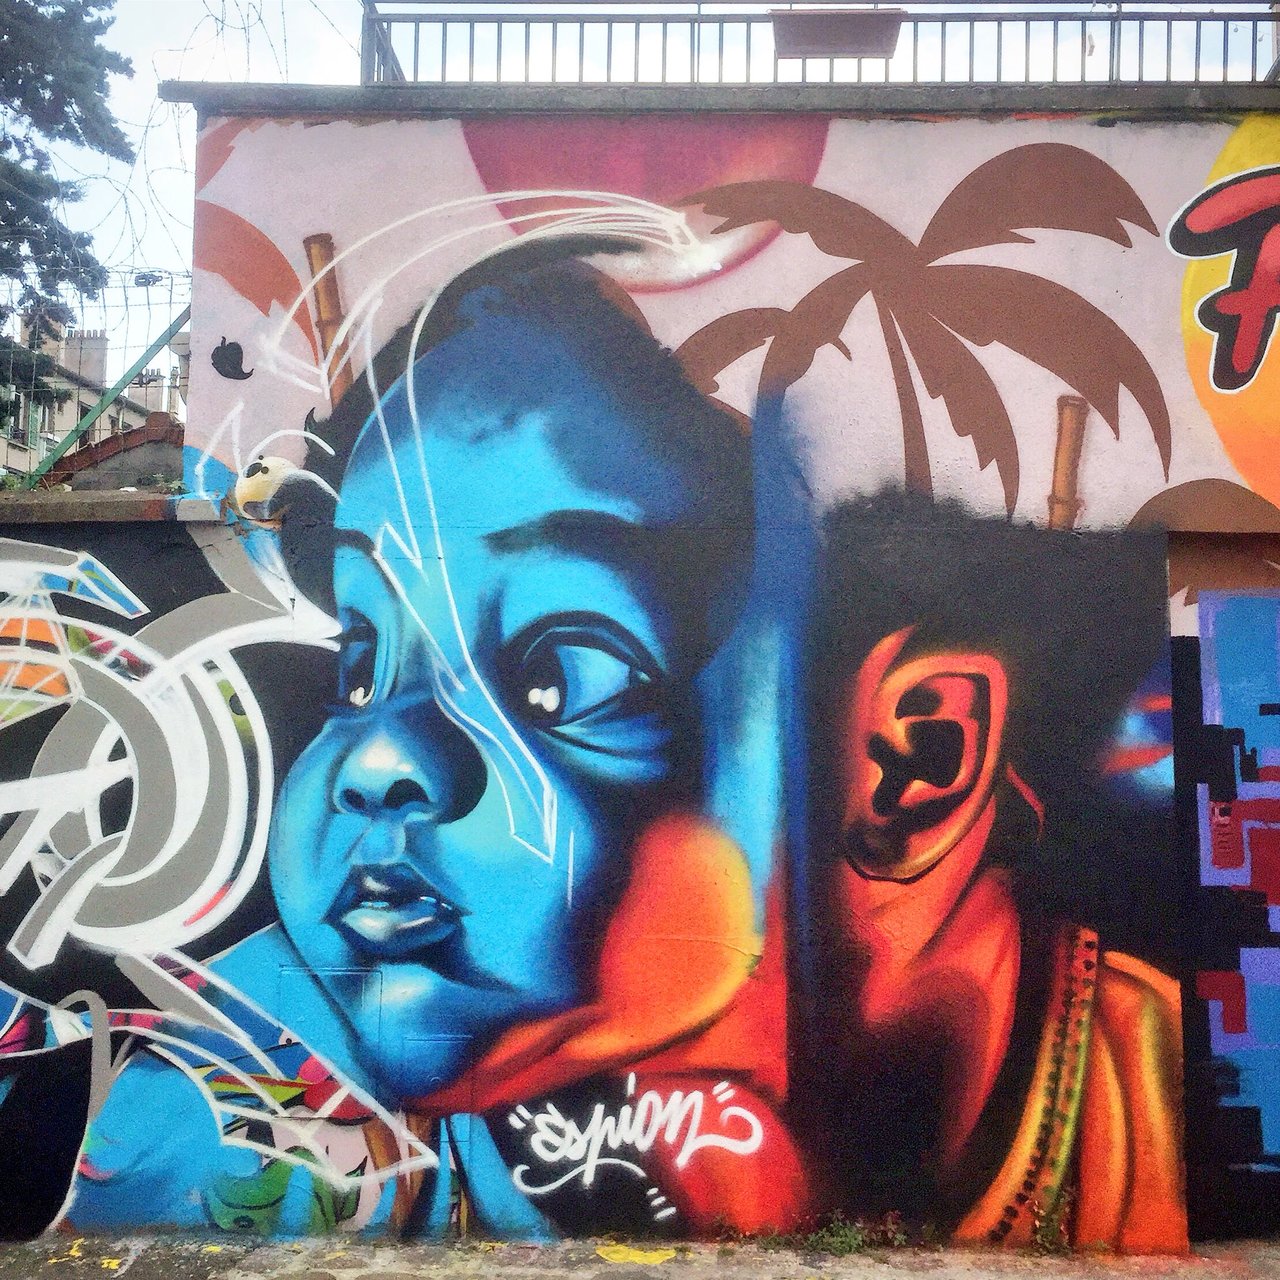 Baby by @EspionGraff #espiongraff #streetart #urbanart #graffiti #graff #wall #streetarteverywhere #streetphoto #urbanwalls #spray #bombing #nirindastreet https://t.co/zVVFfBNy2N